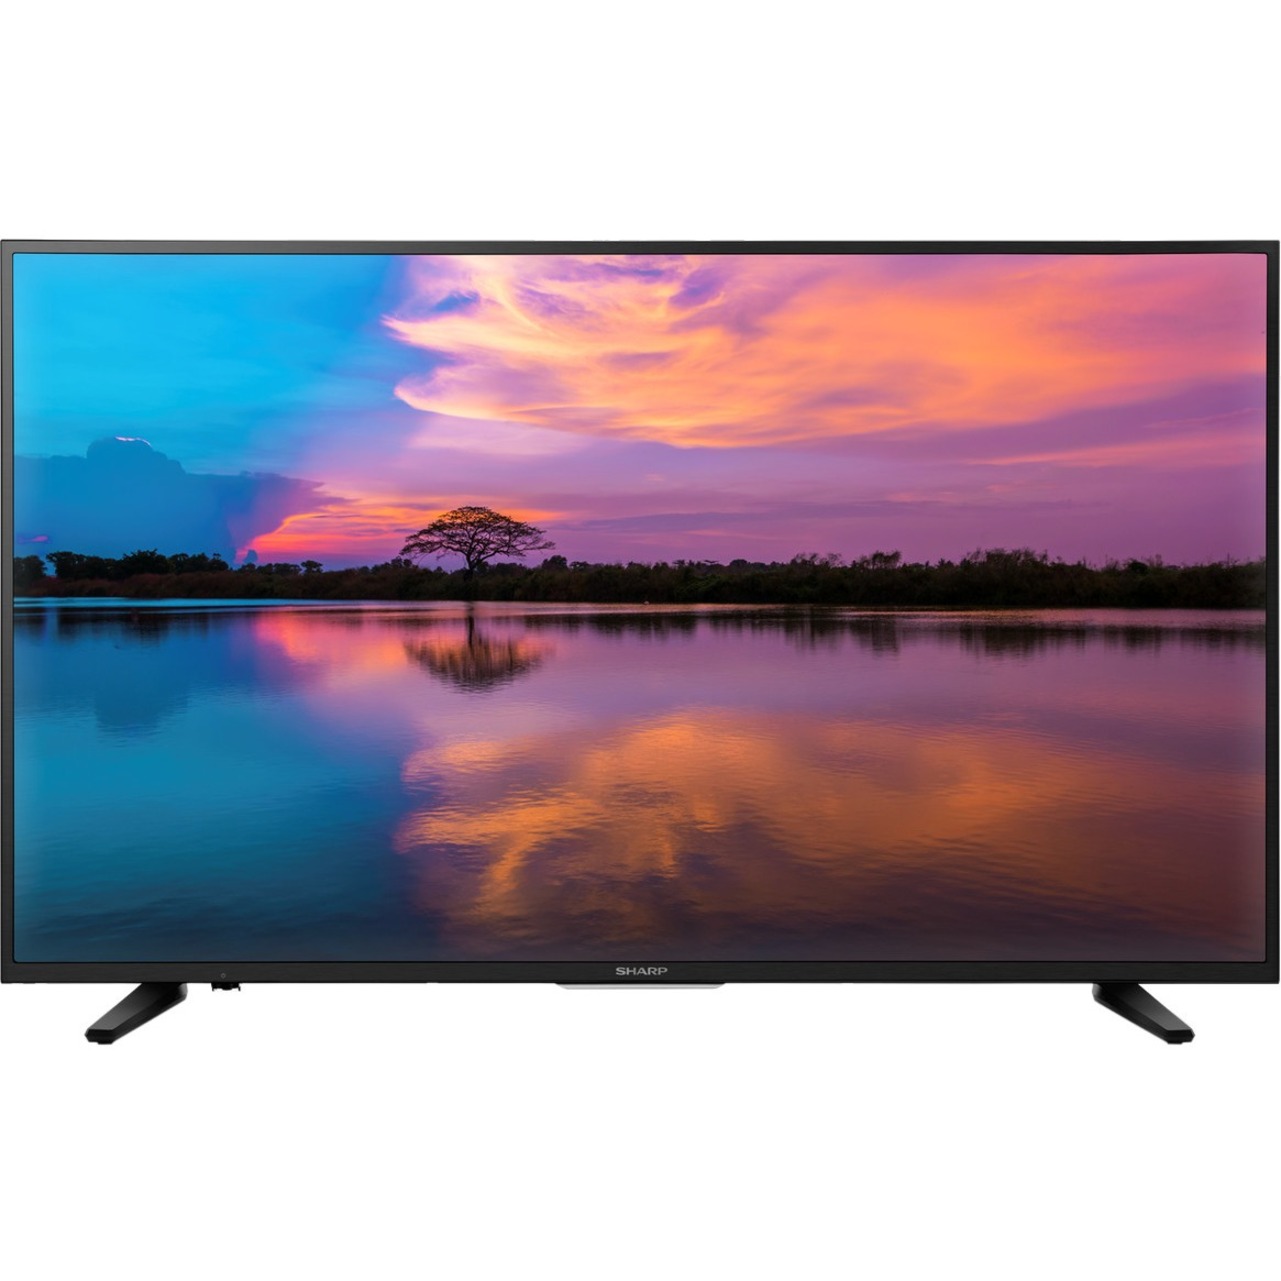 Sharp 65" Class 4K UHDTV (2160p) HDR Smart LED-LCD TV (LC-65Q7000U) - image 4 of 8